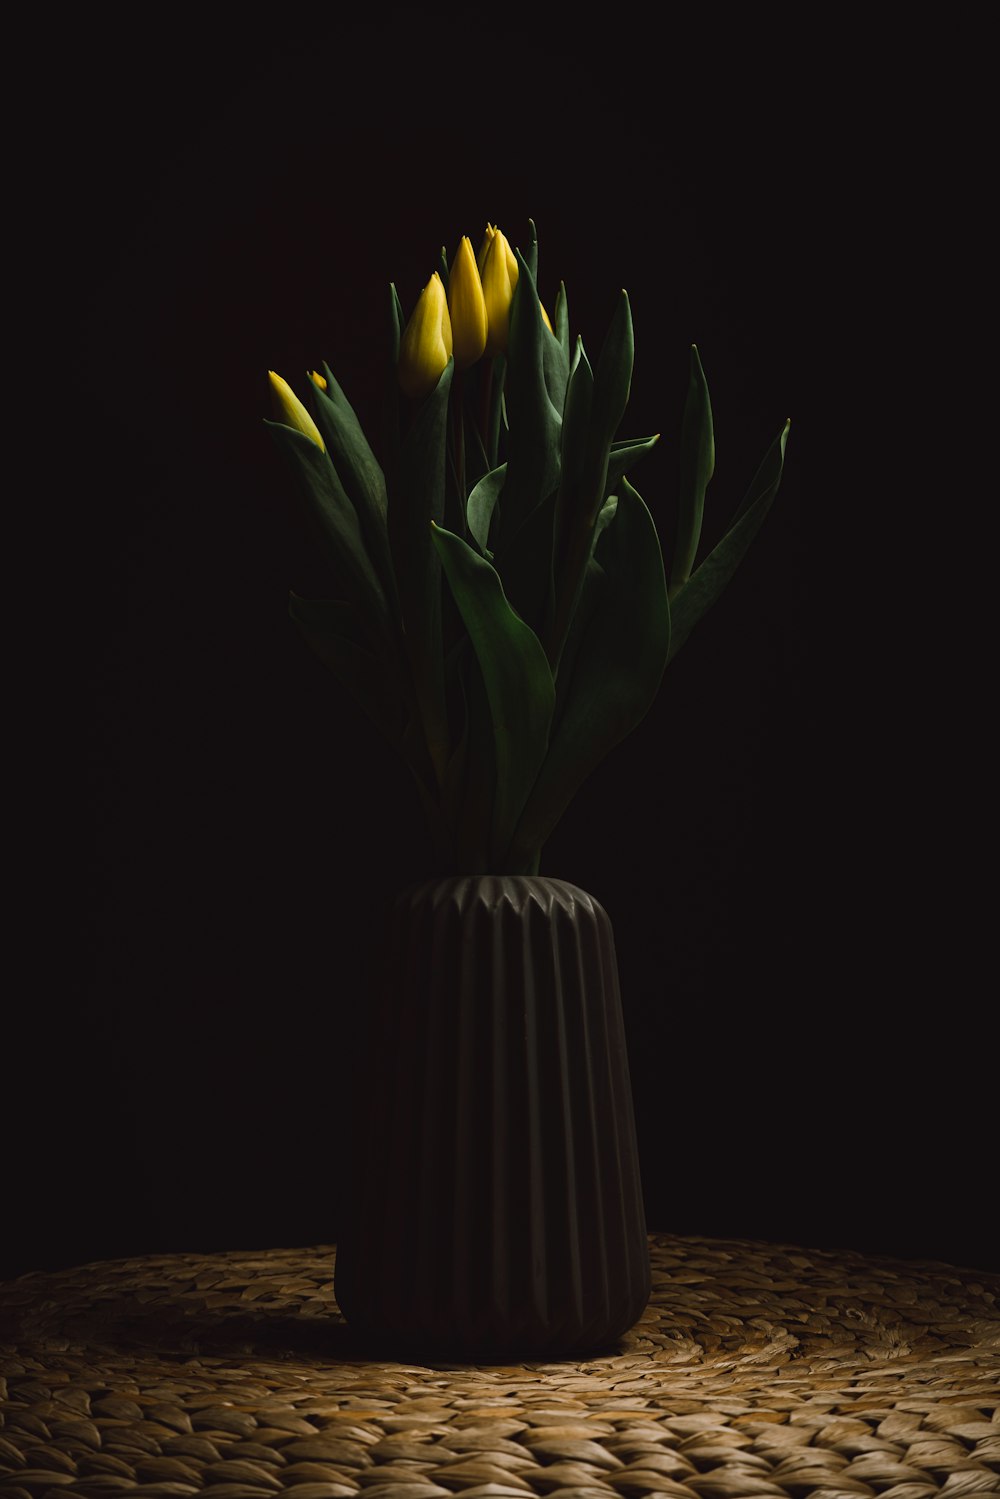 yellow tulips in white ceramic vase